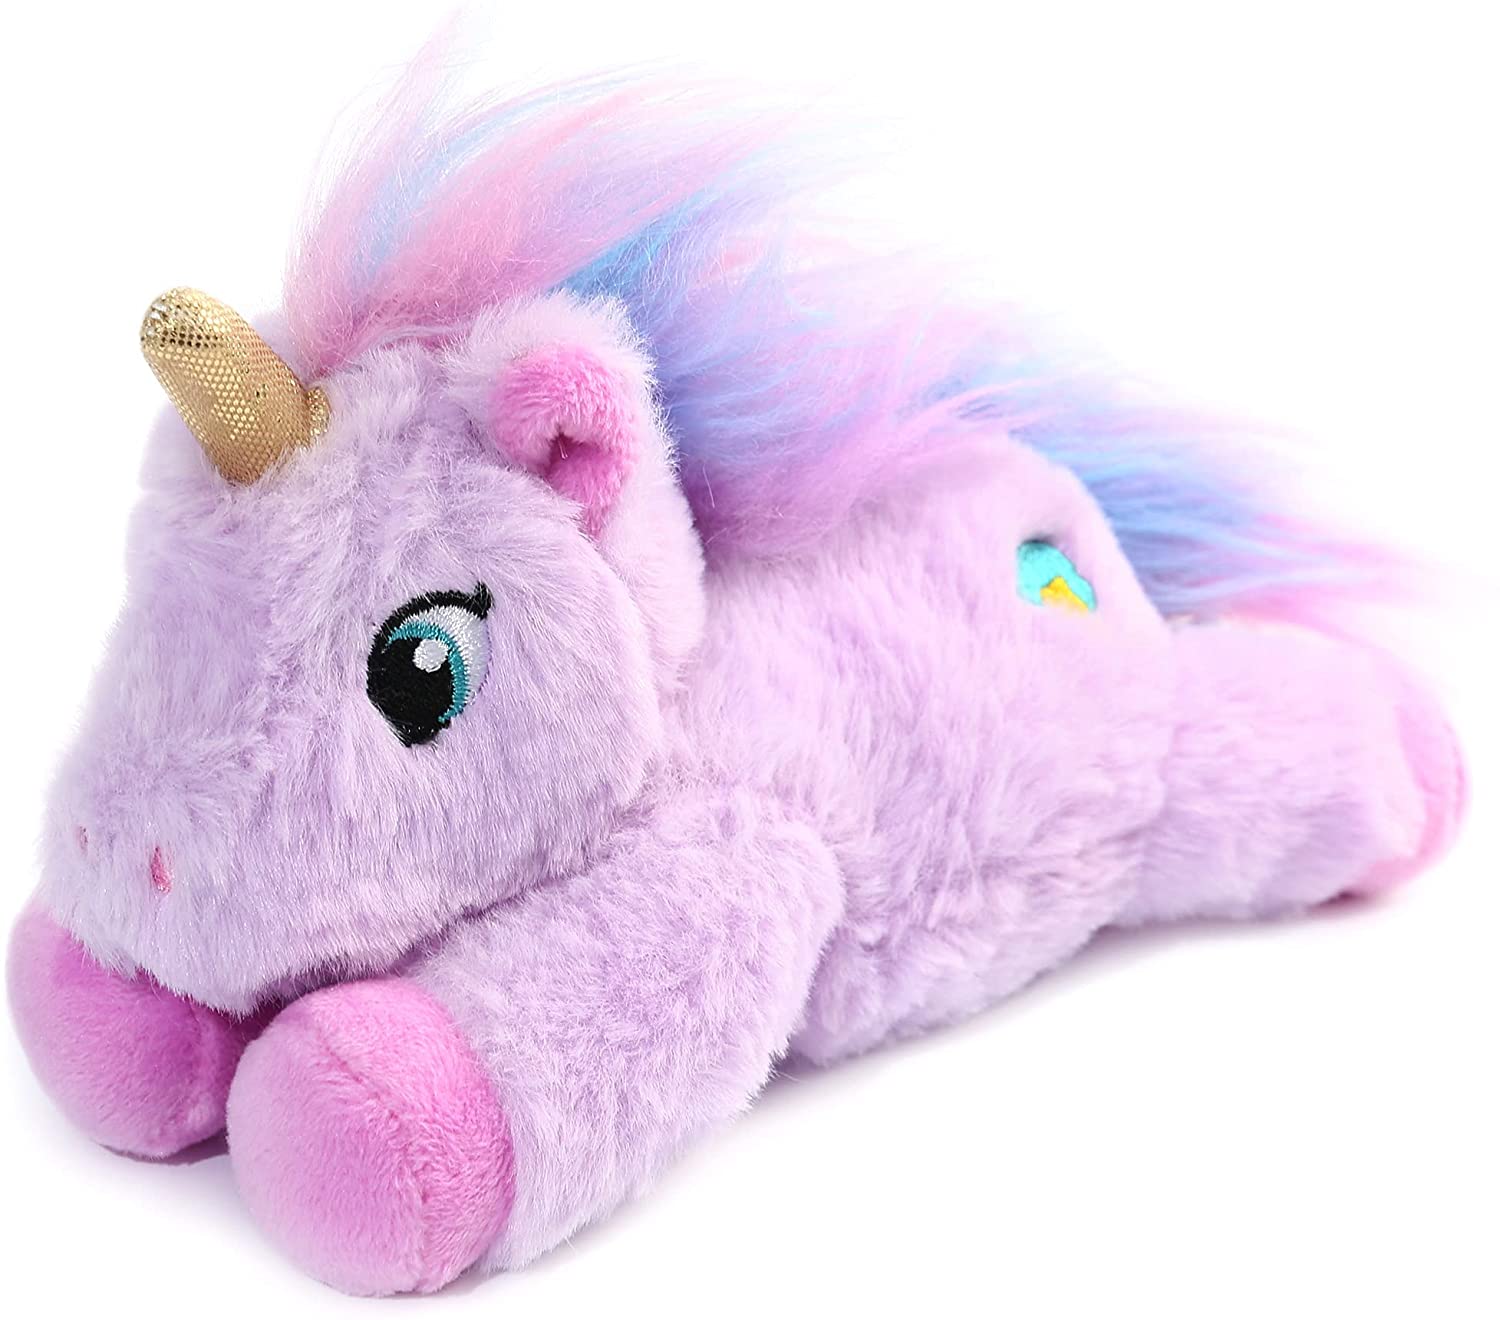 LotFancy 2 Pcs 7 in Unicorn Stuffed Animal Plush Toys Gift for Kids Girls Boys, Purple and White - image 4 of 6